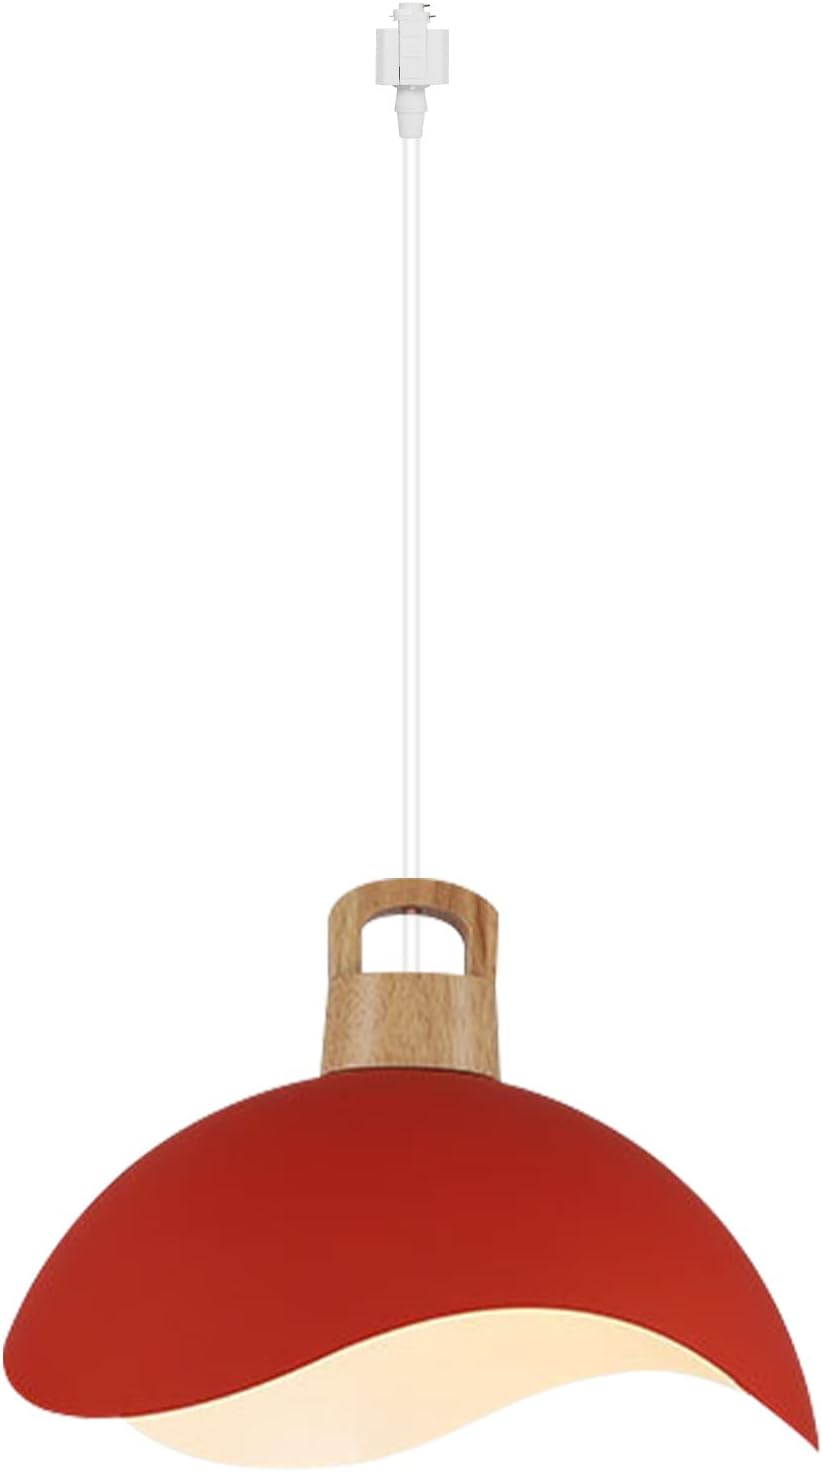 Kiven H-Type Track Lights, E26 1-Light Track MountedSimple Nordic Style Macaron Wood Rrt Petal-Shaped Hanging Crescent Lamp for Dinne